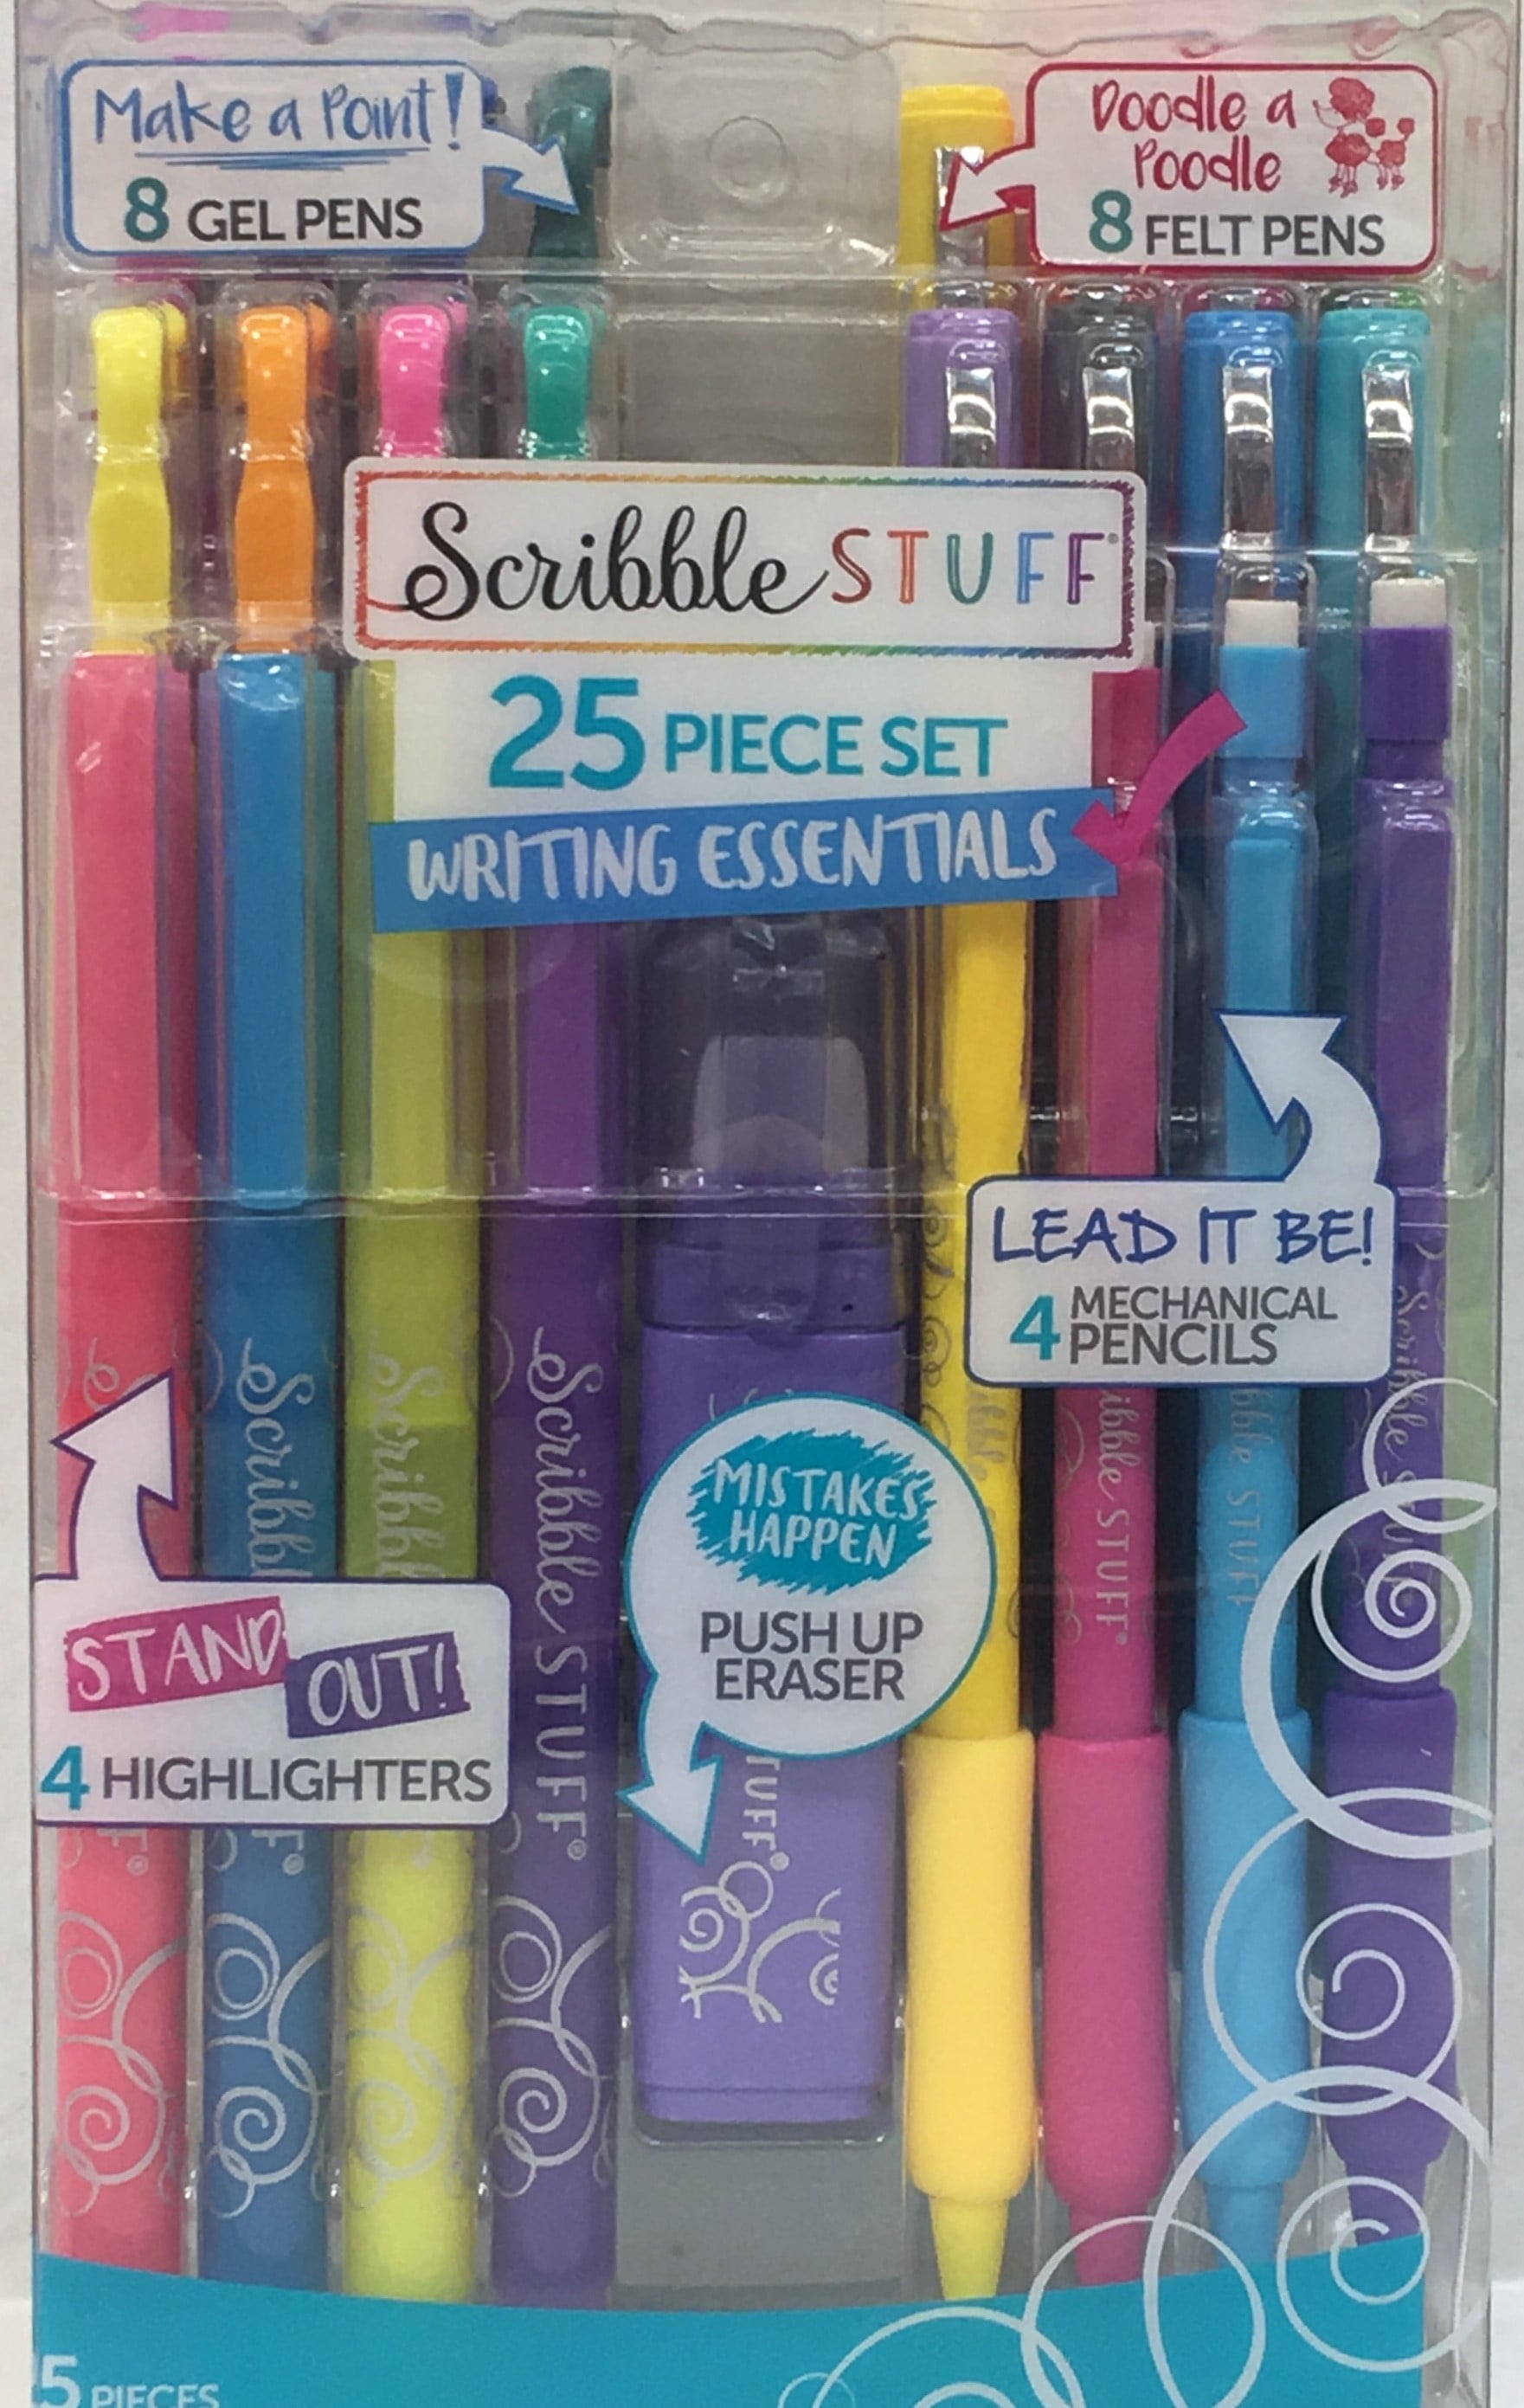 Scribble Stuff 25 Piece Writing Kit – Walmart Inventory Checker – BrickSeek